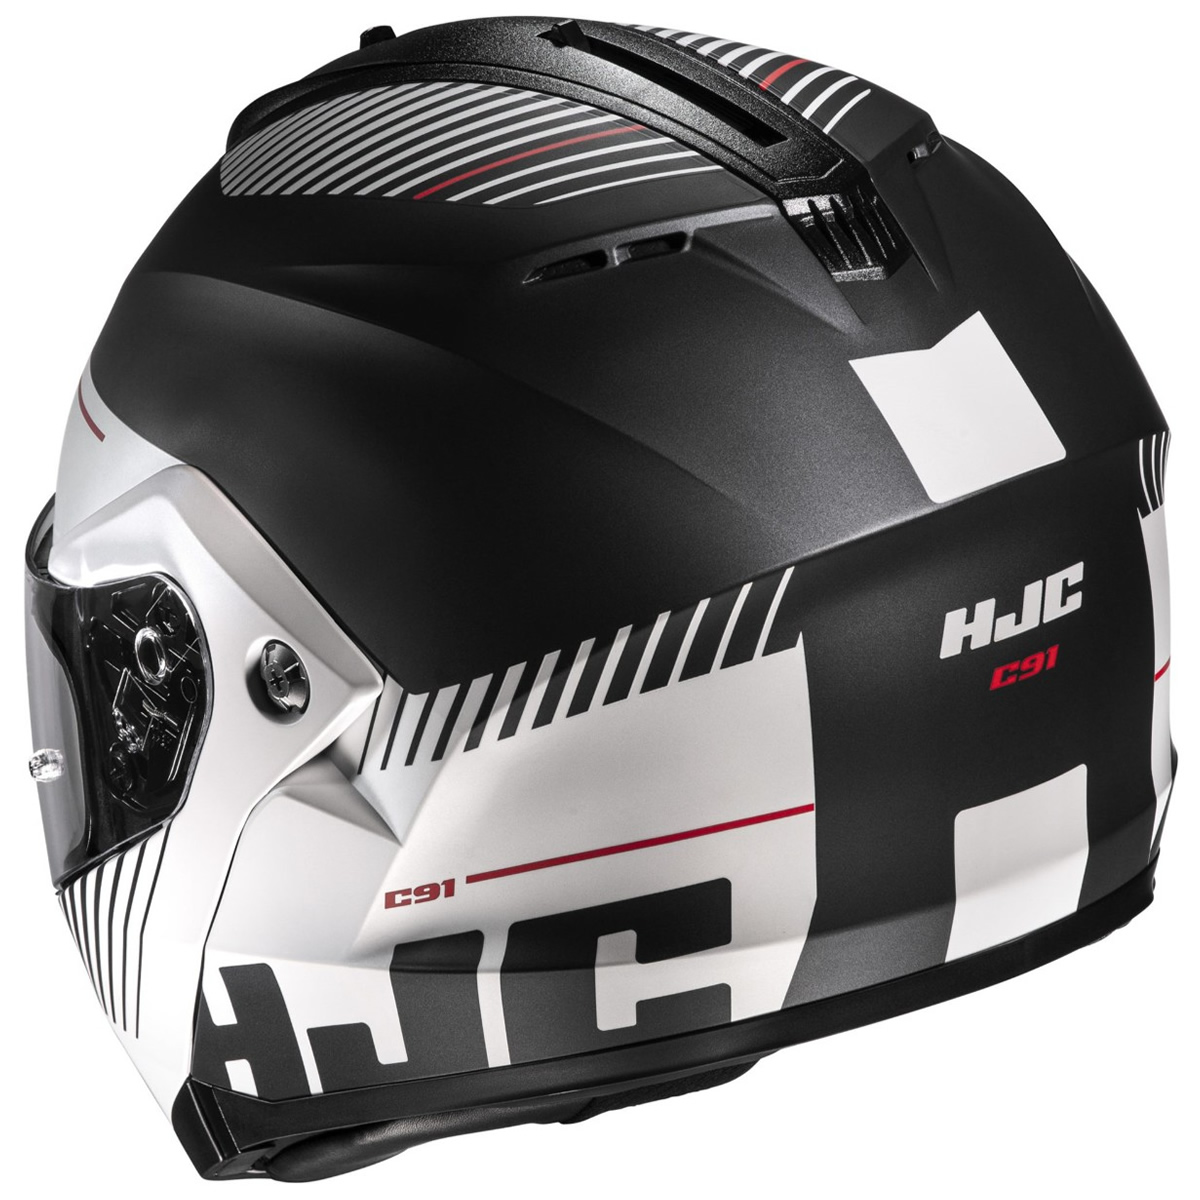 HJC Helm C91 Prod, schwarz-weiß-rot matt